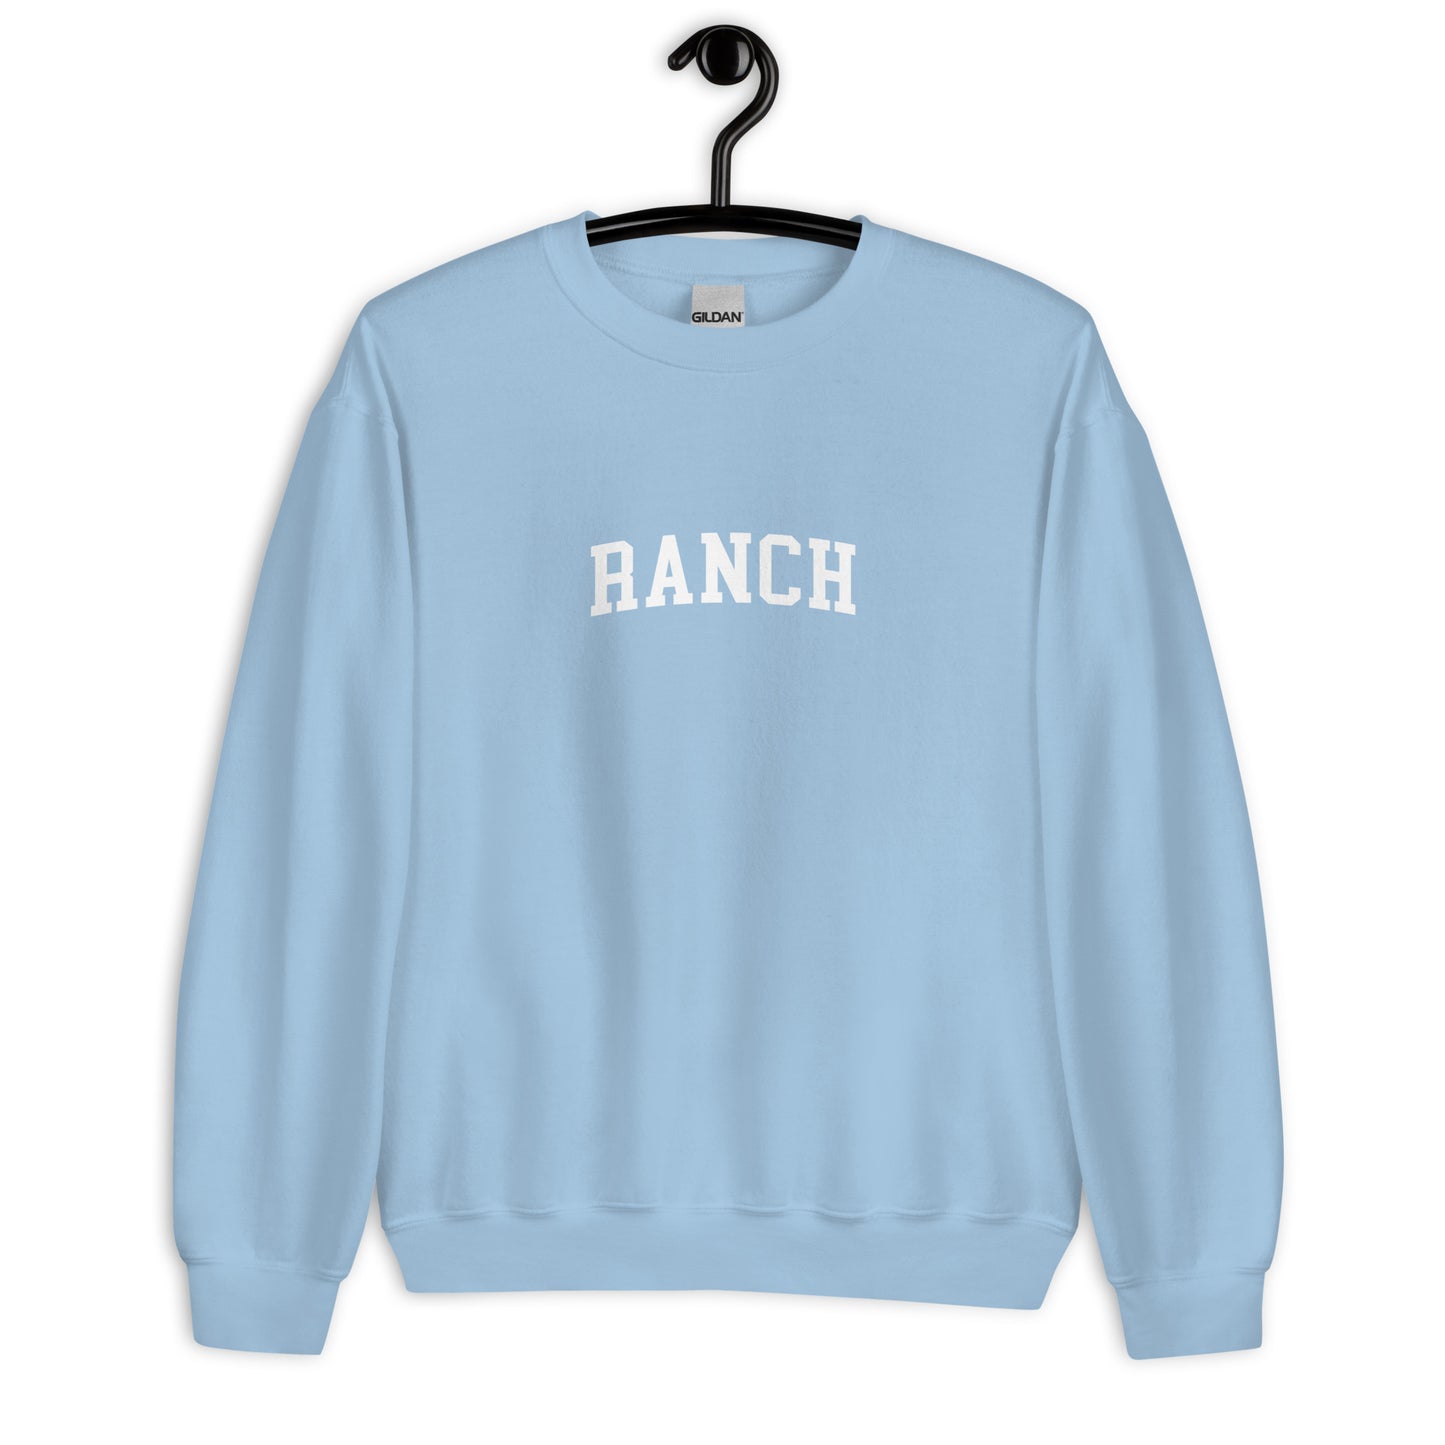 Ranch Sweatshirt - Arched Font